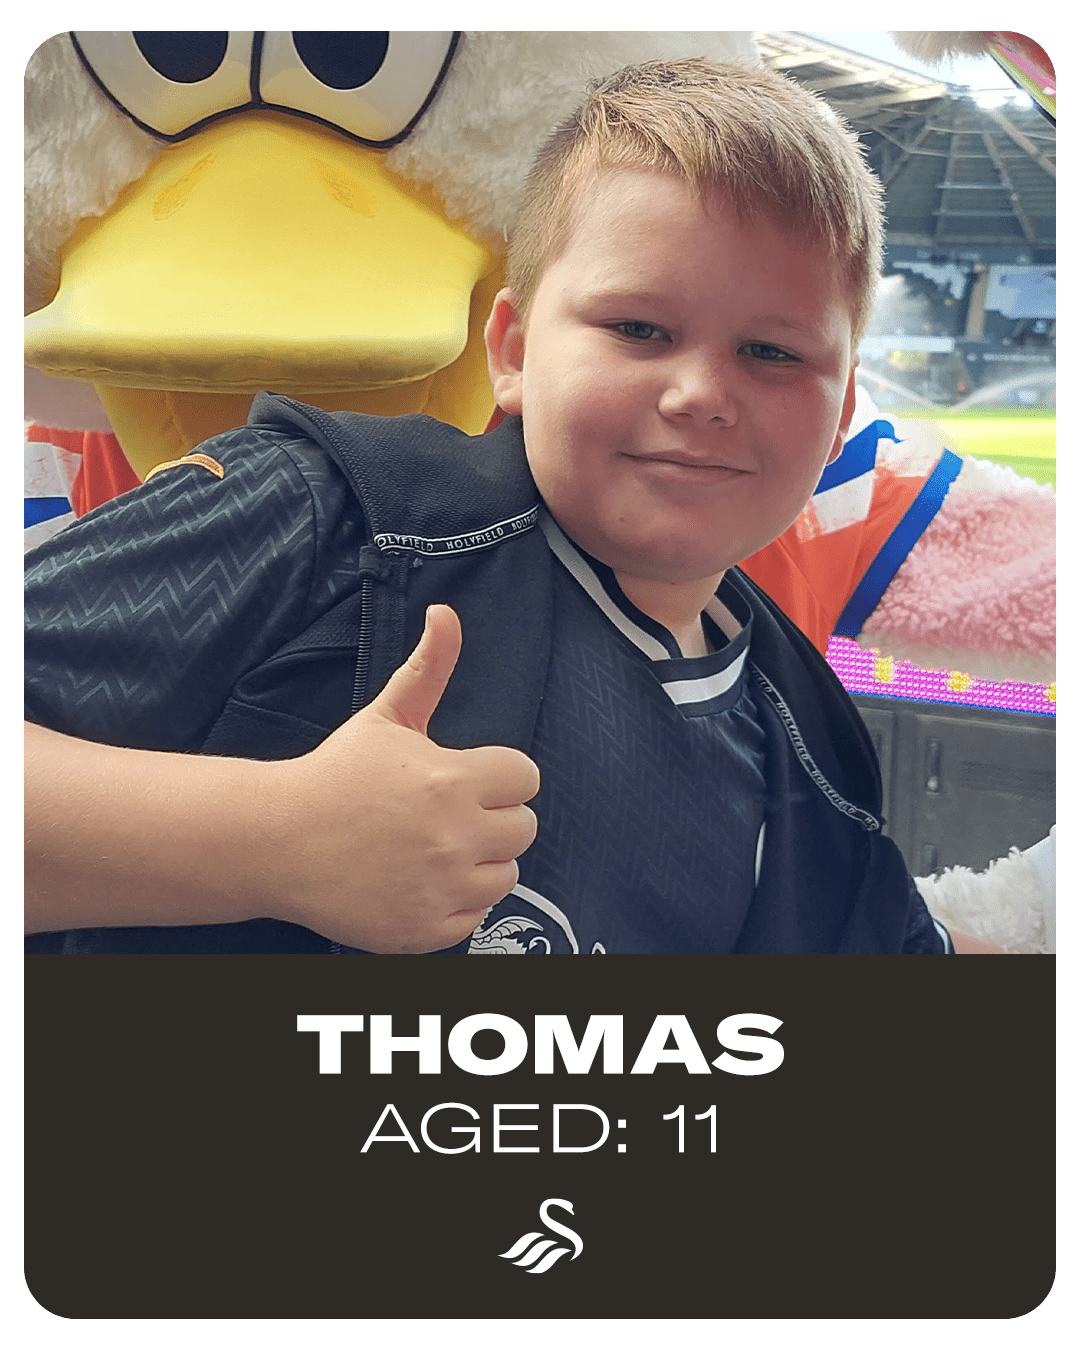 Thomas, aged 11